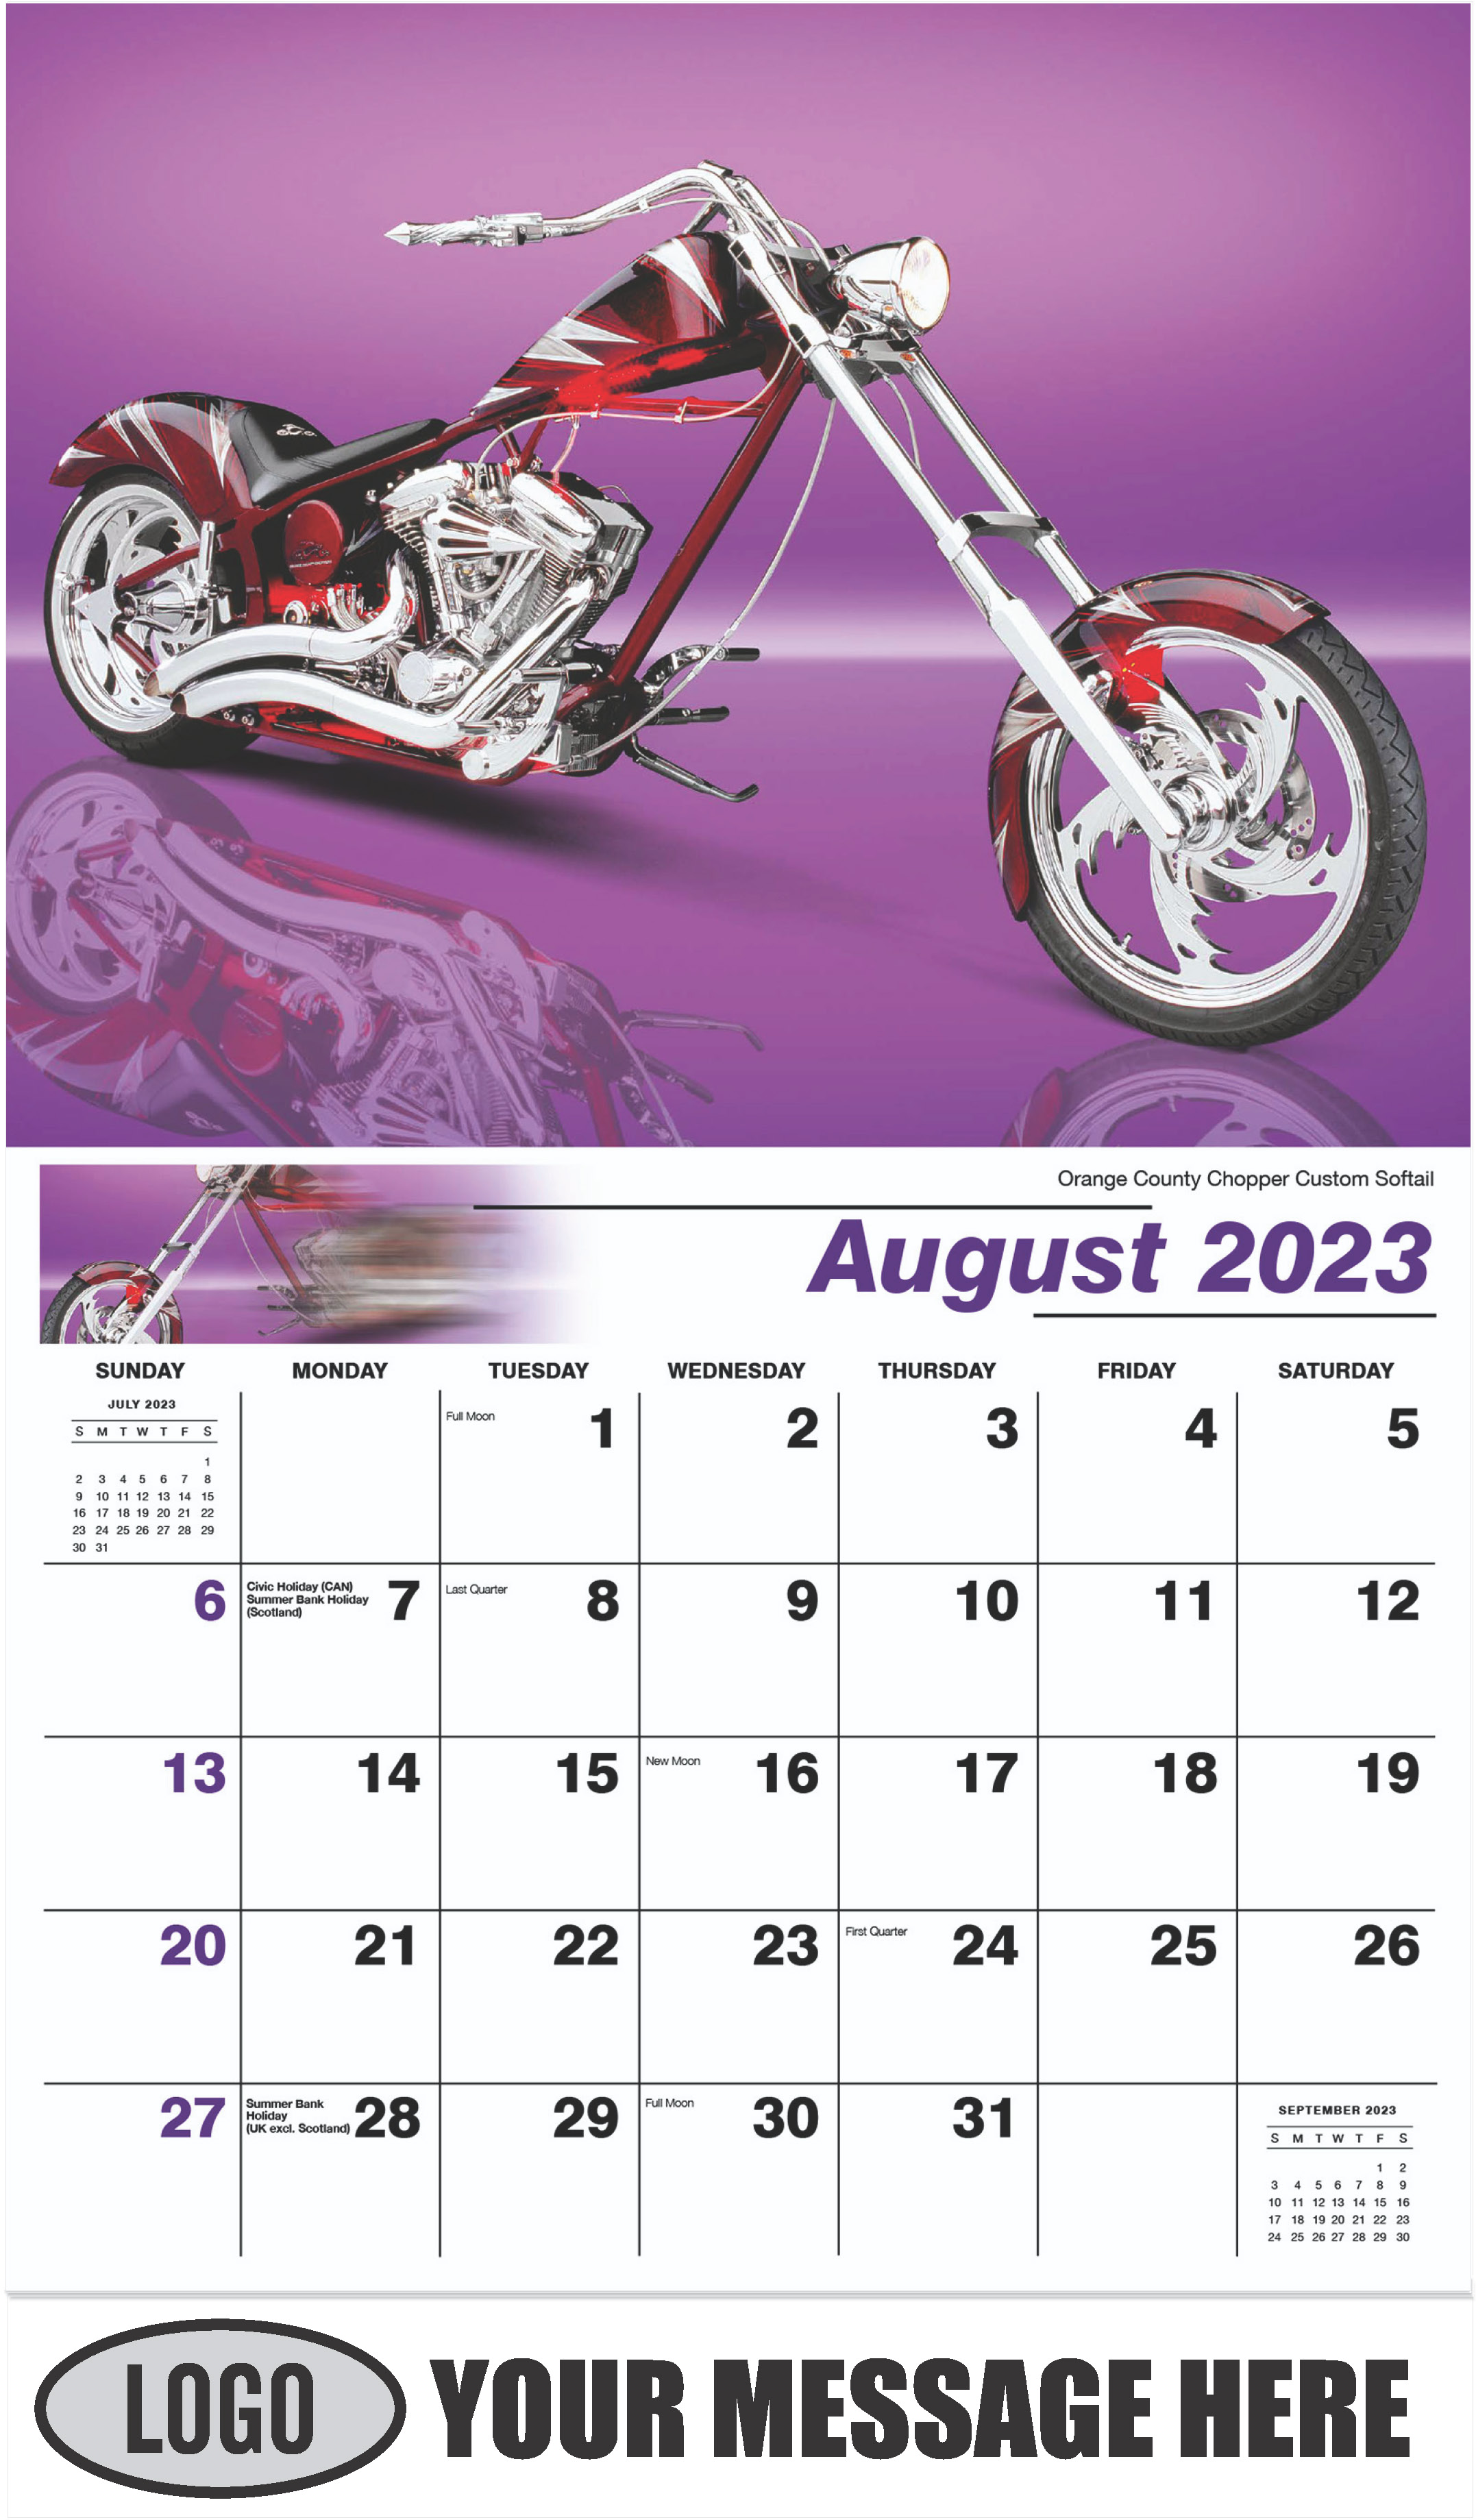 Orange County Chopper Custom Softail - August - Motorcycle Mania 2023 Promotional Calendar